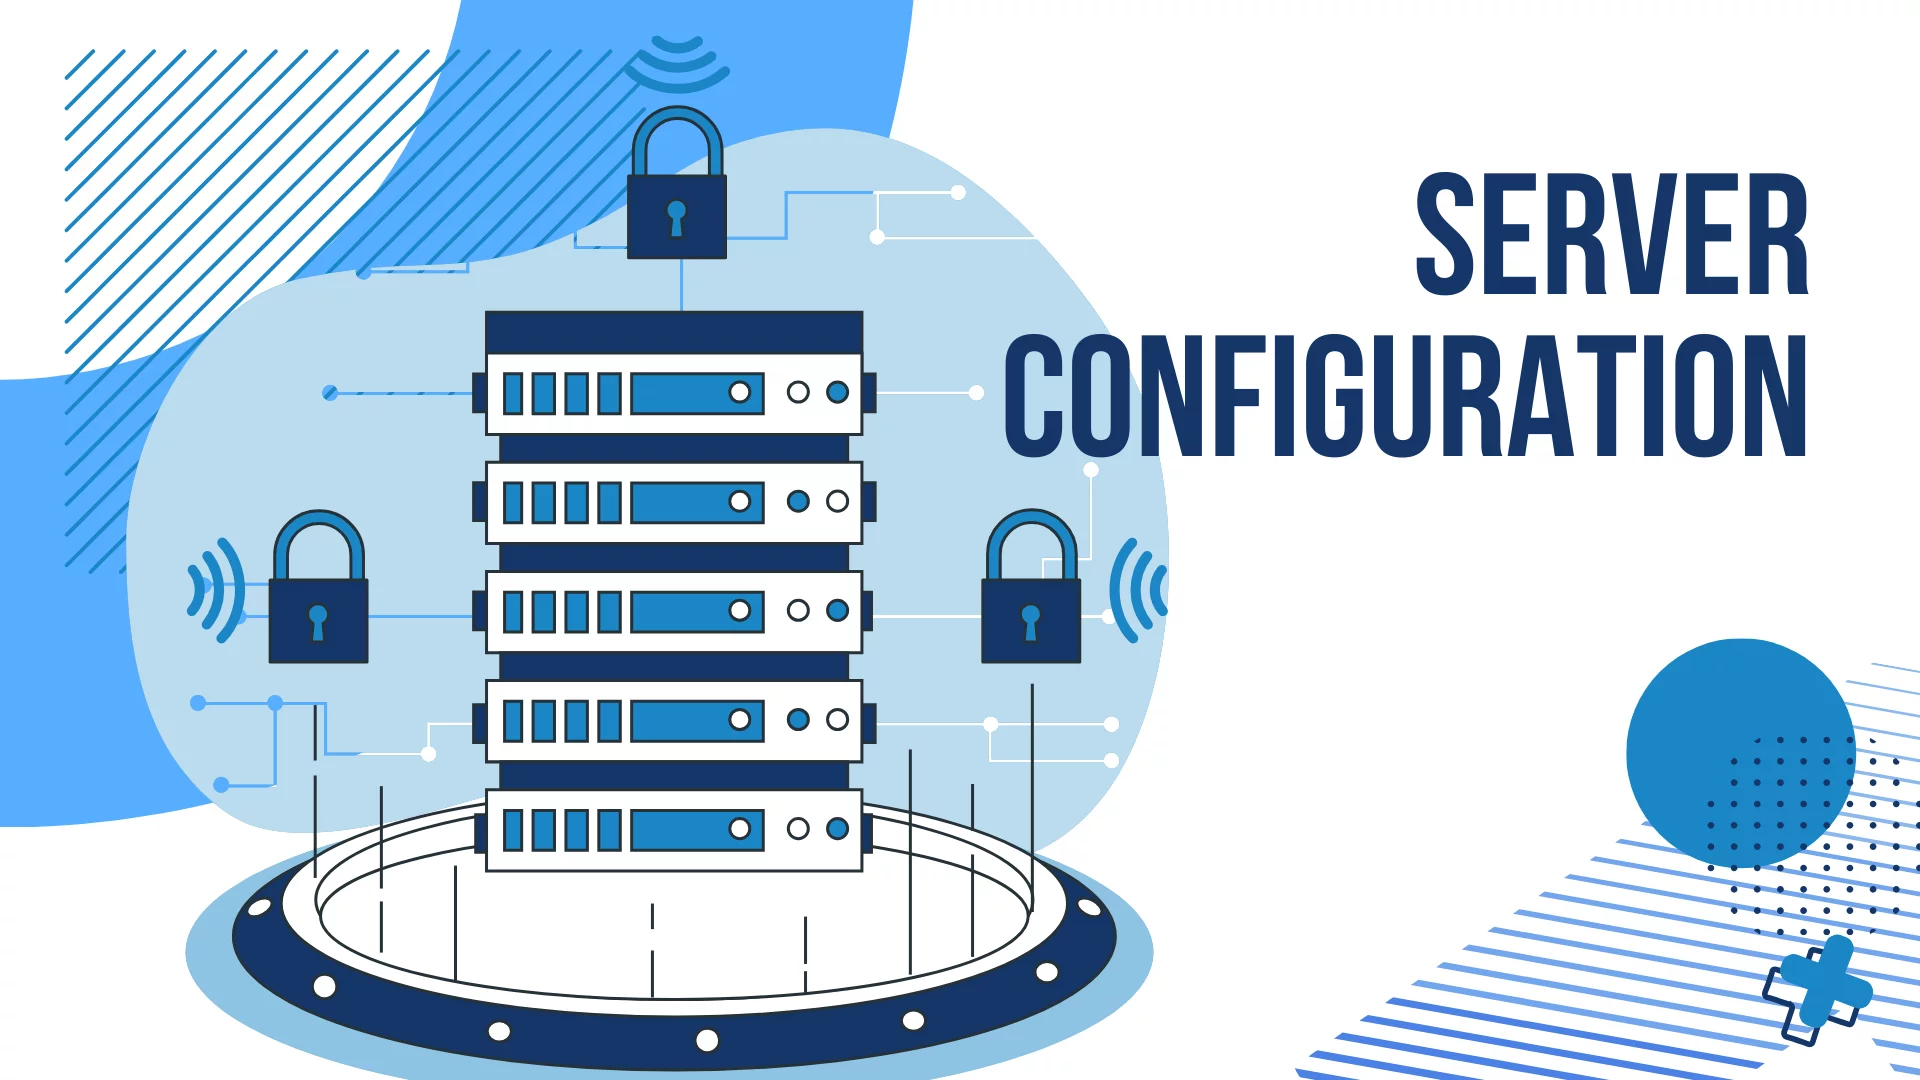 Server Configuration for Nodejs security